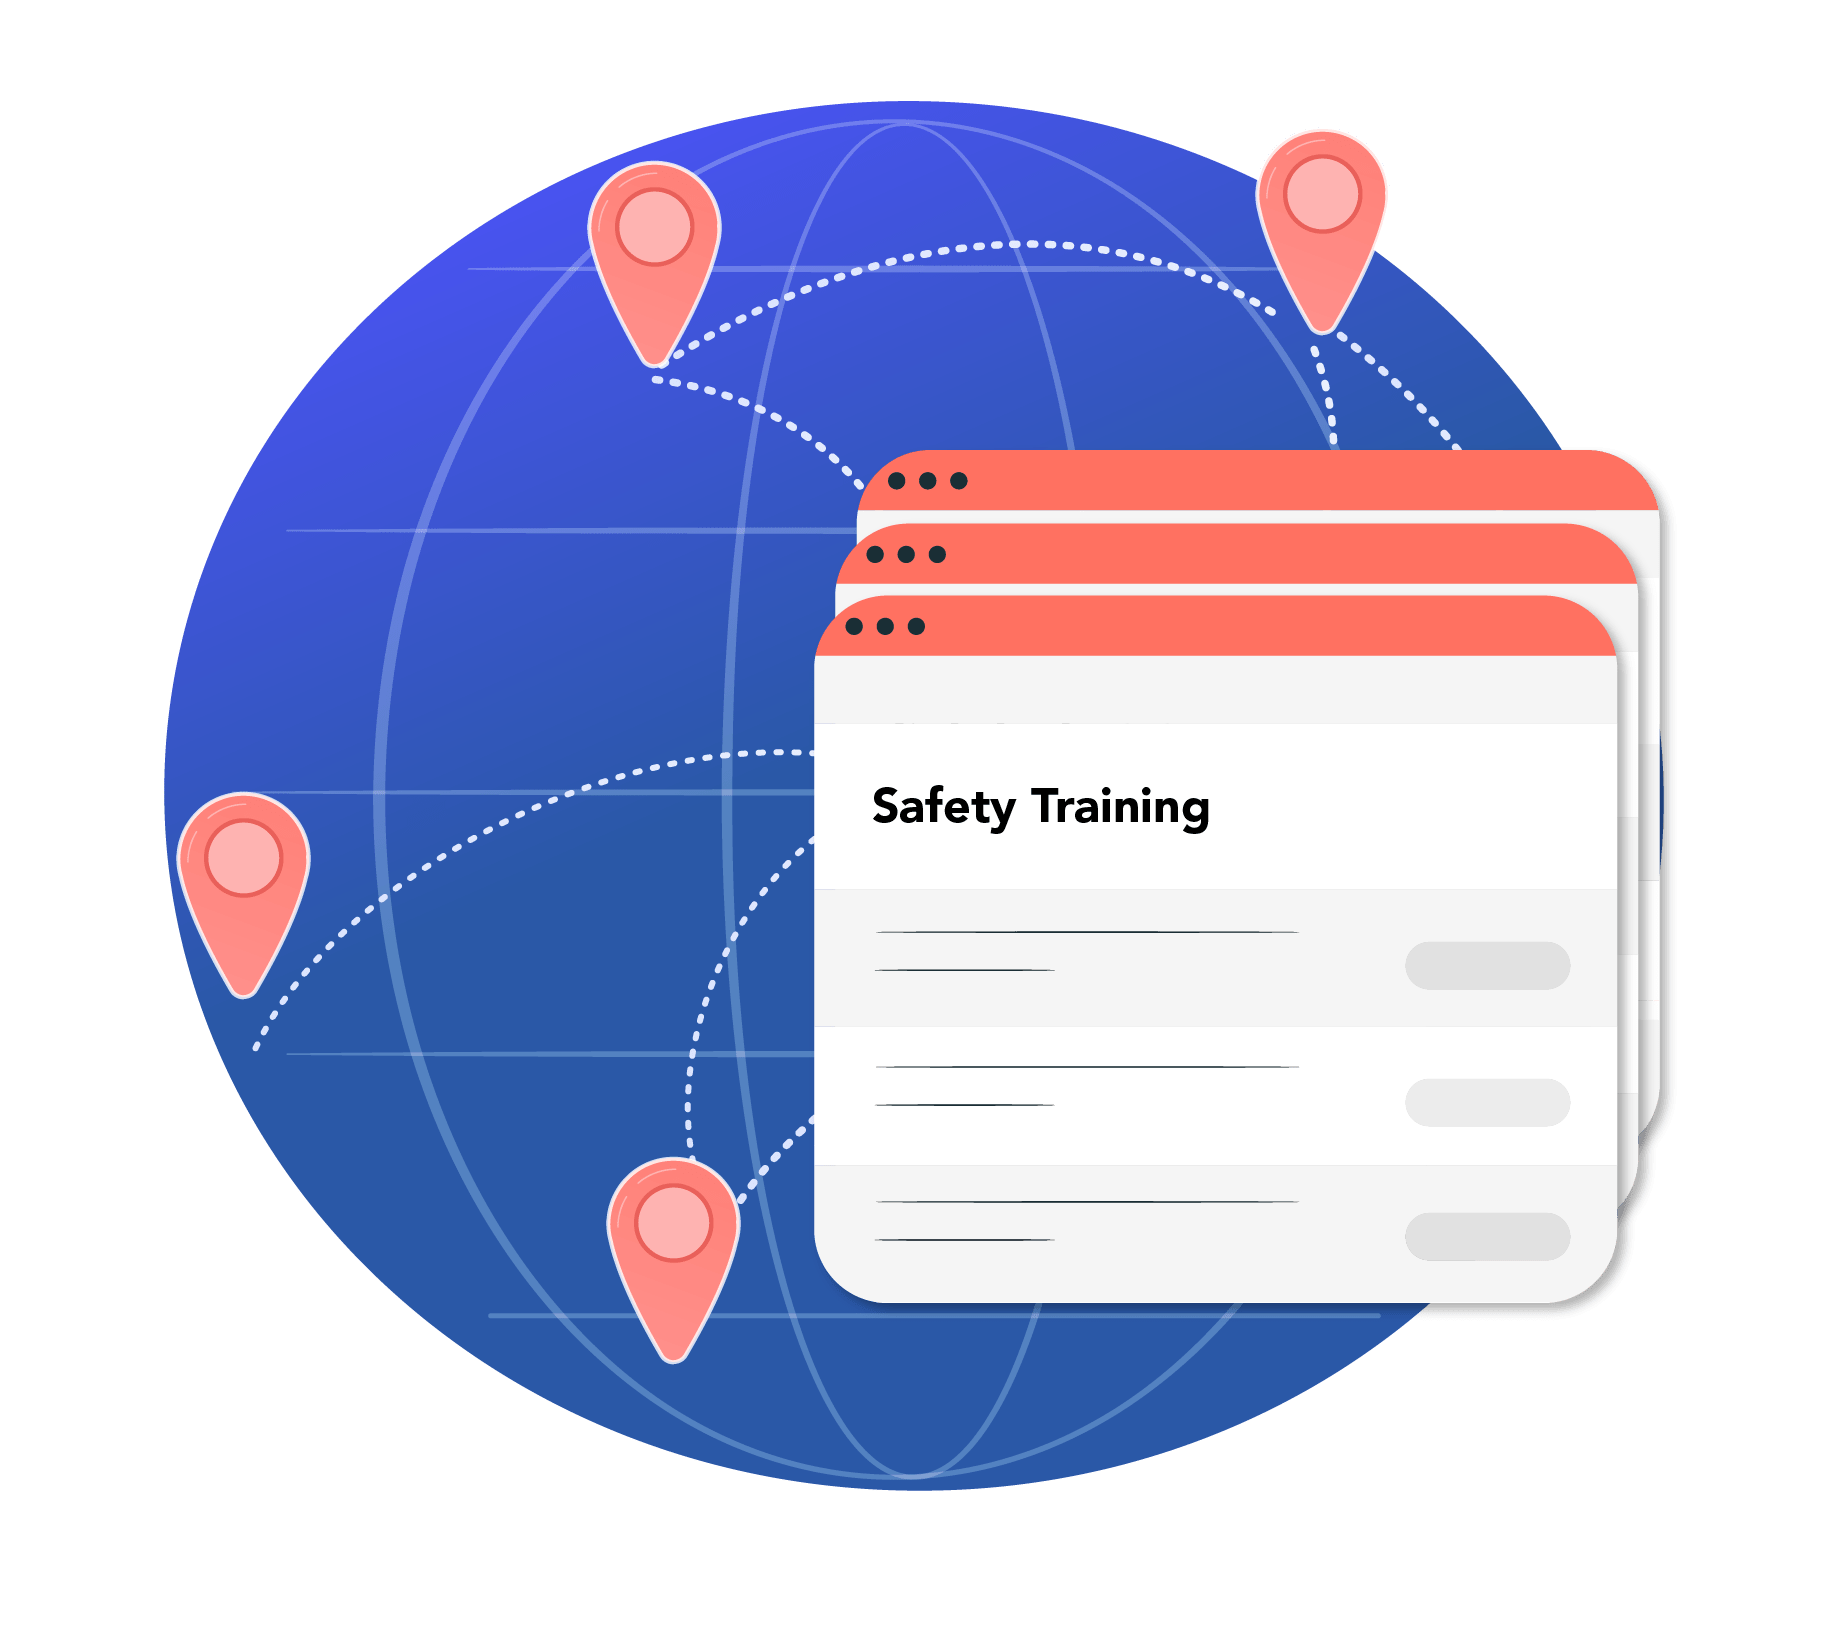 Track Multiple Safety Trainings around the globe